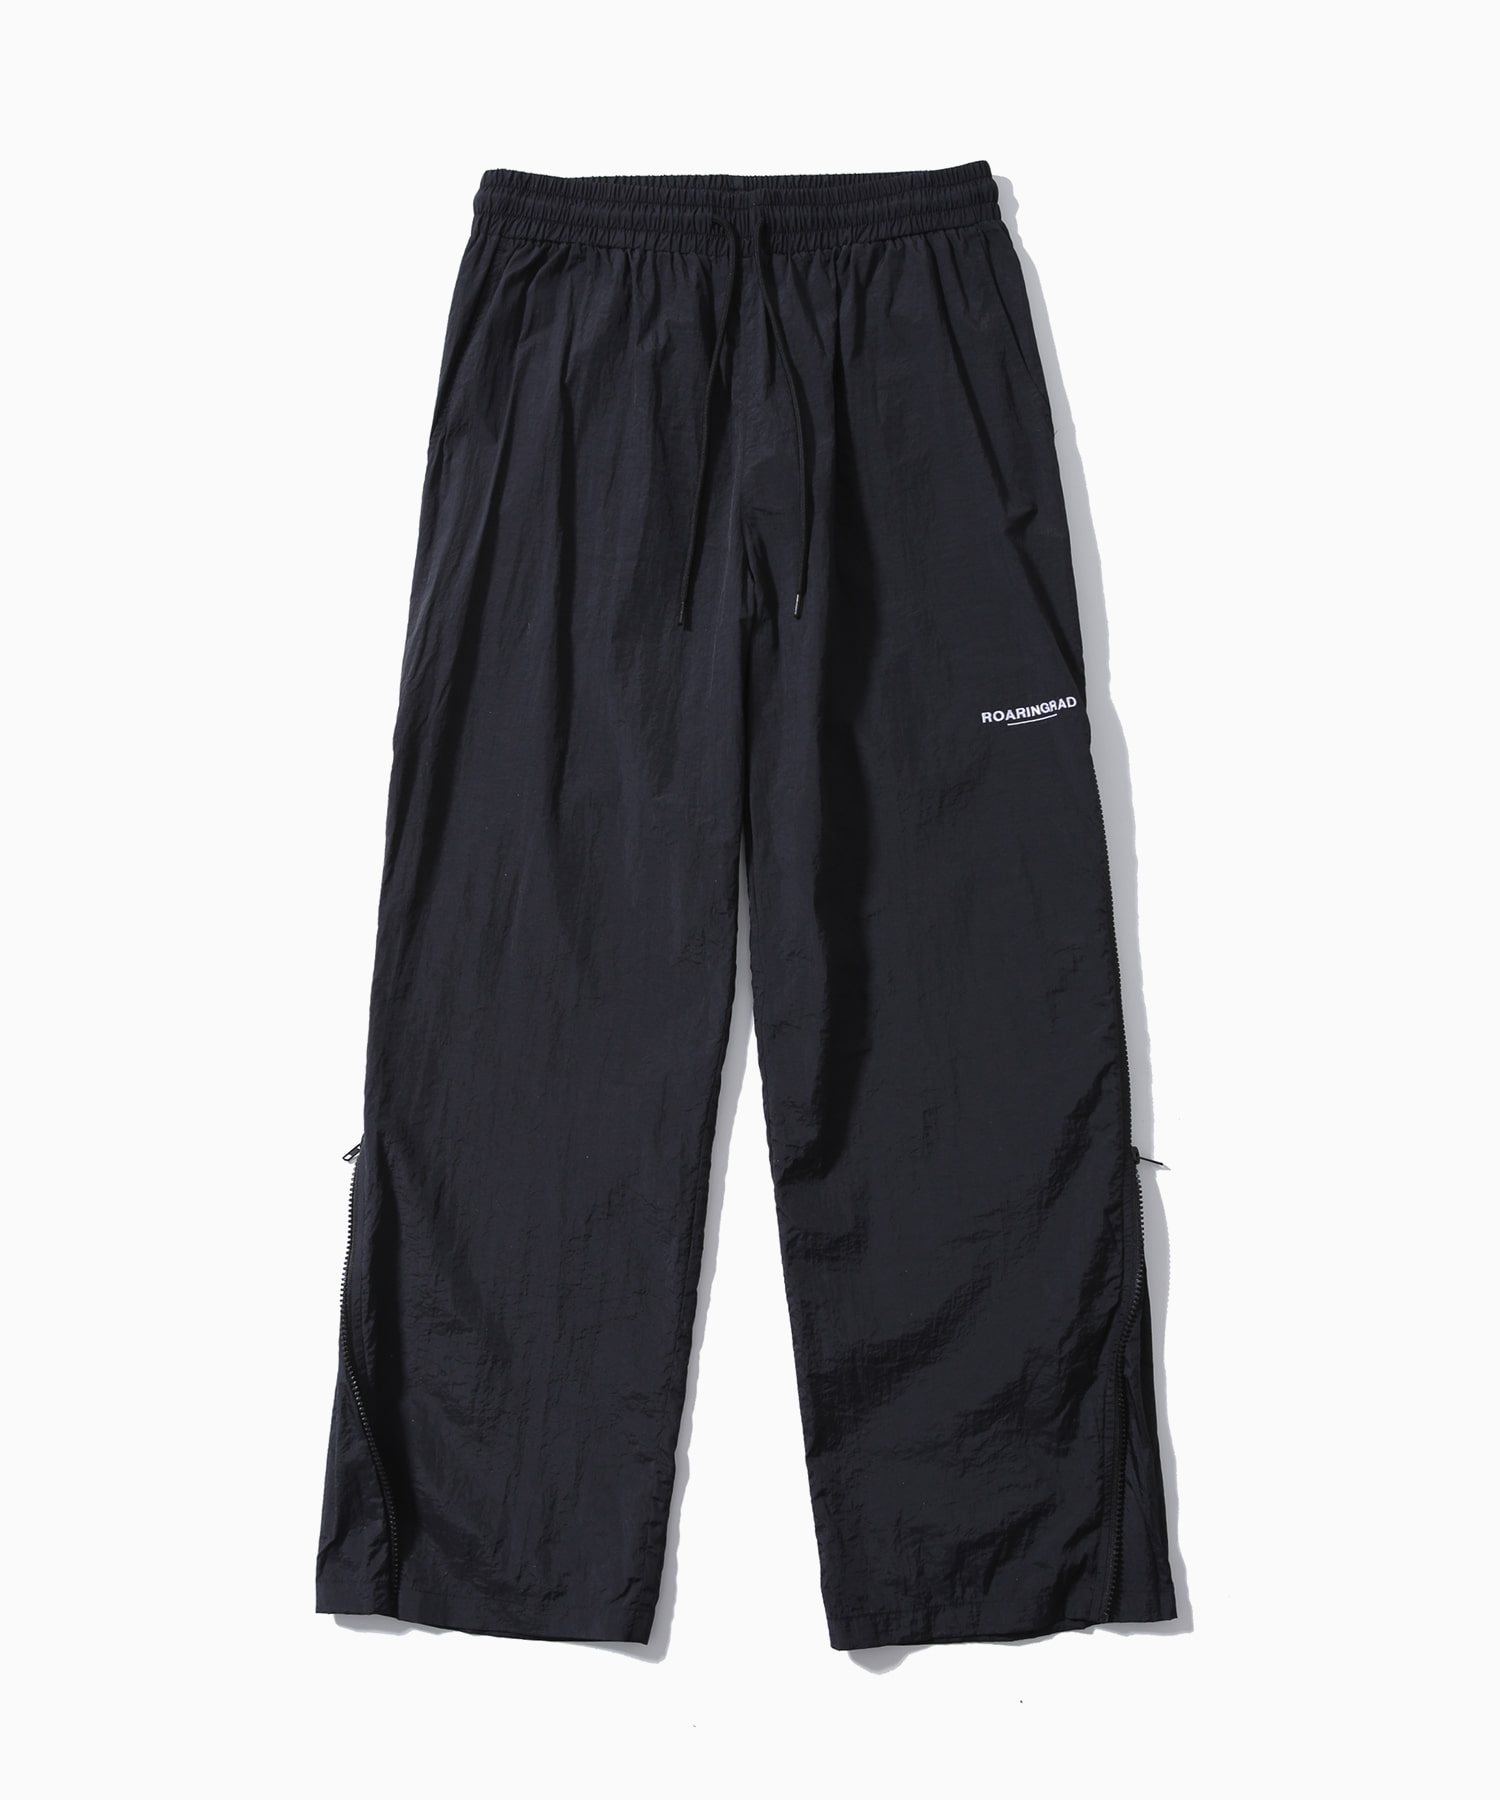 side zipper nylon pants black - 로어링라드(ROARINGRAD)